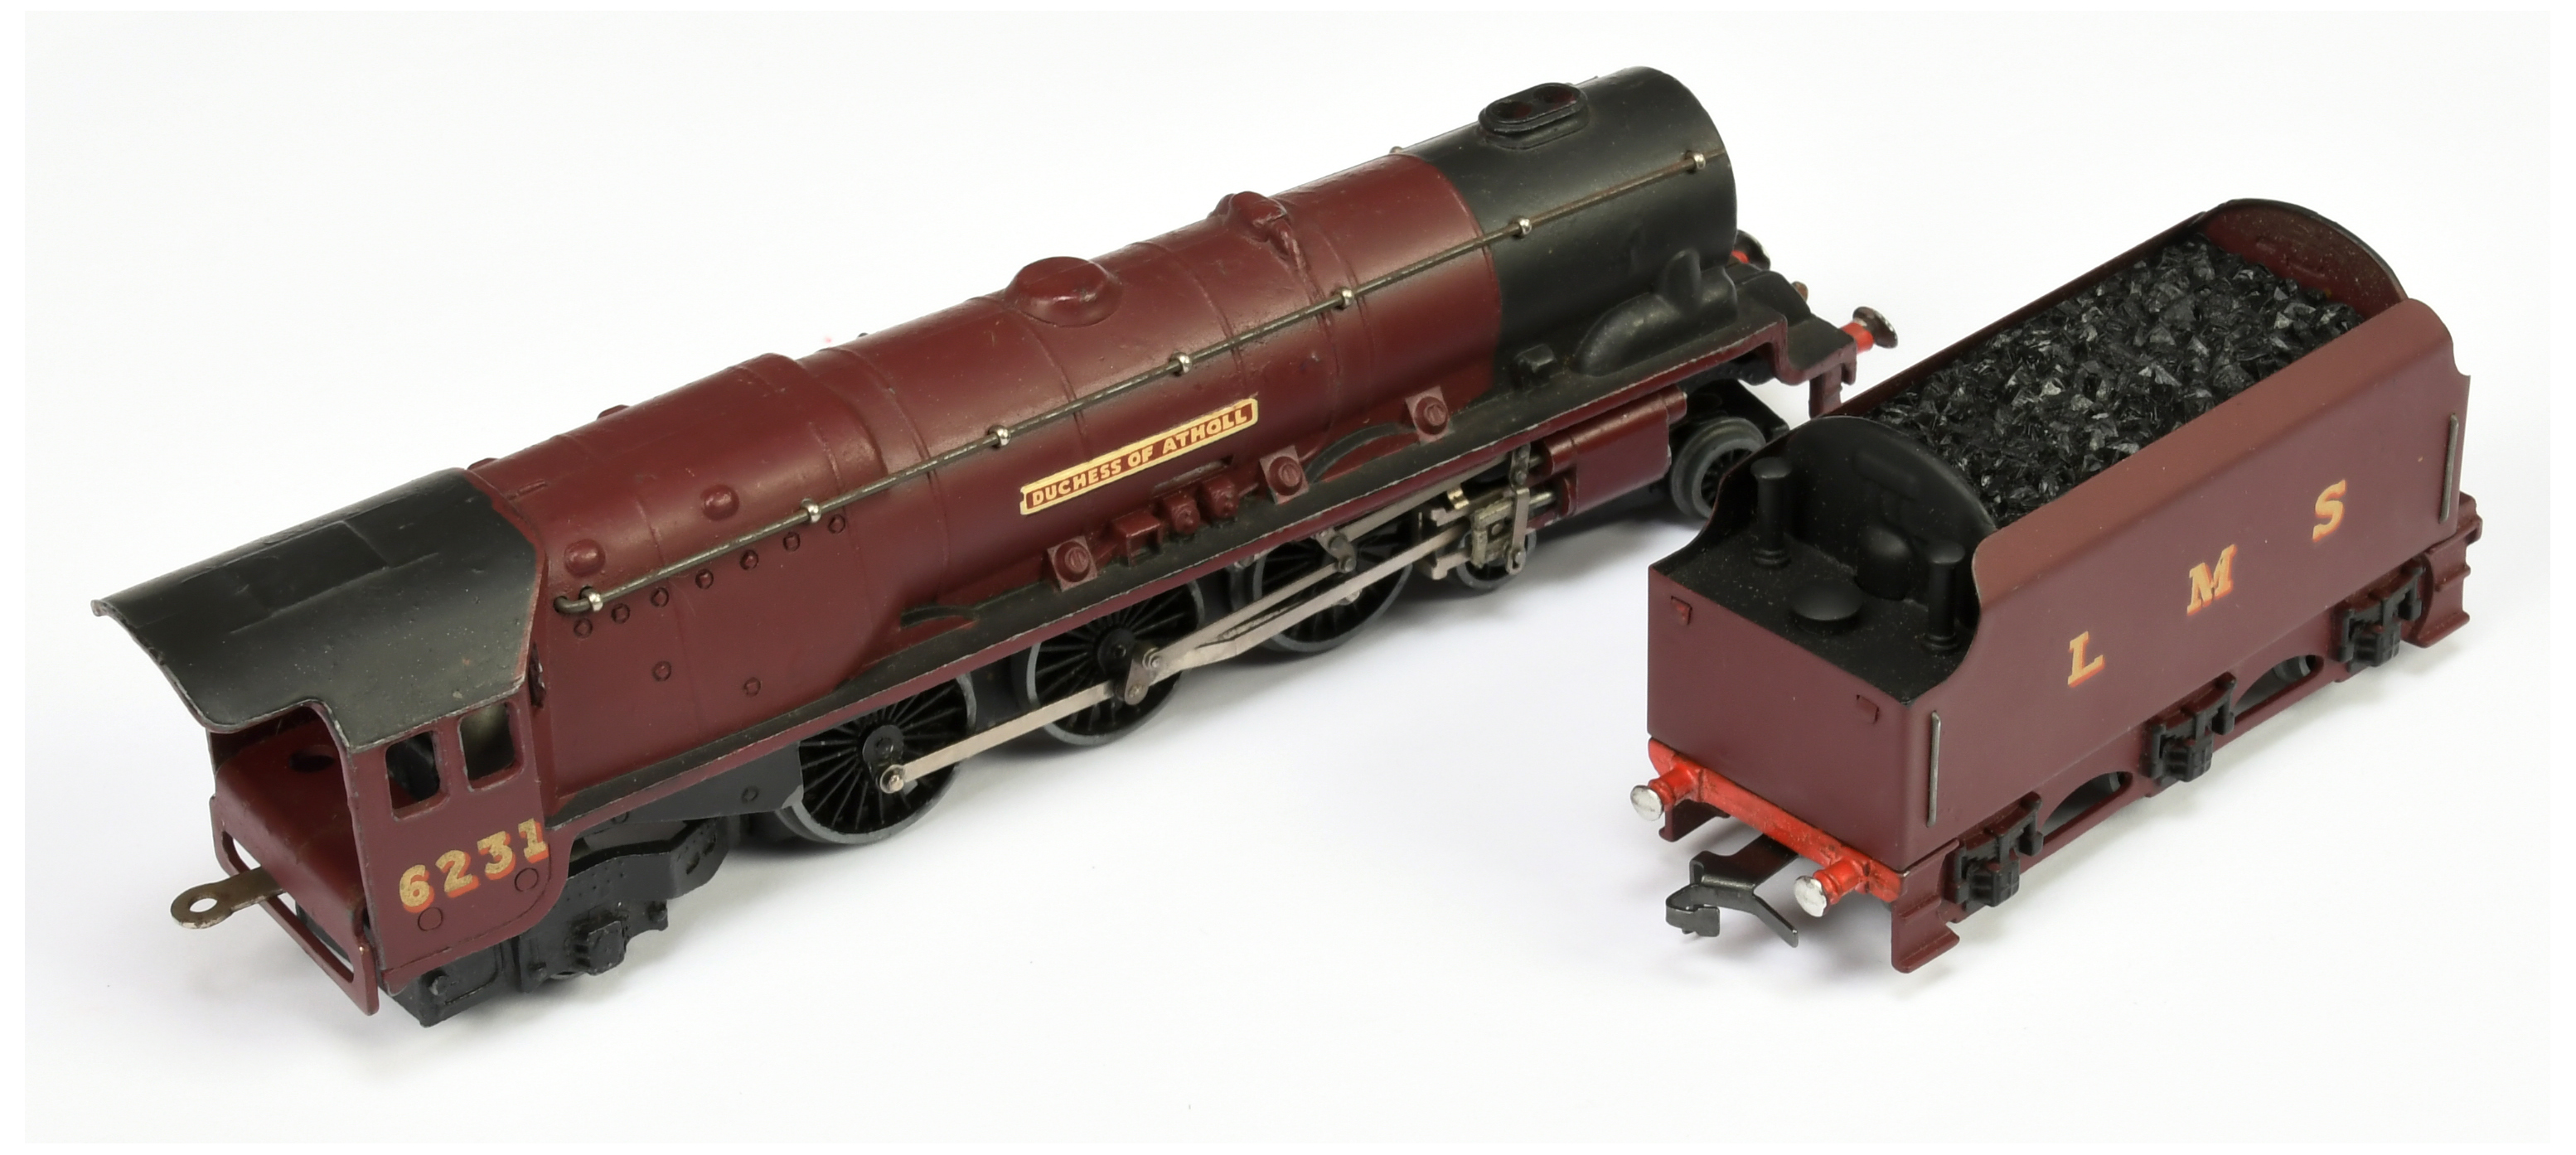 Hornby Dublo 3-rail EDL2/D2 4-6-2 LMS Princess Coronation Class Steam Locomotive No. 6231 "Duches... - Bild 2 aus 2